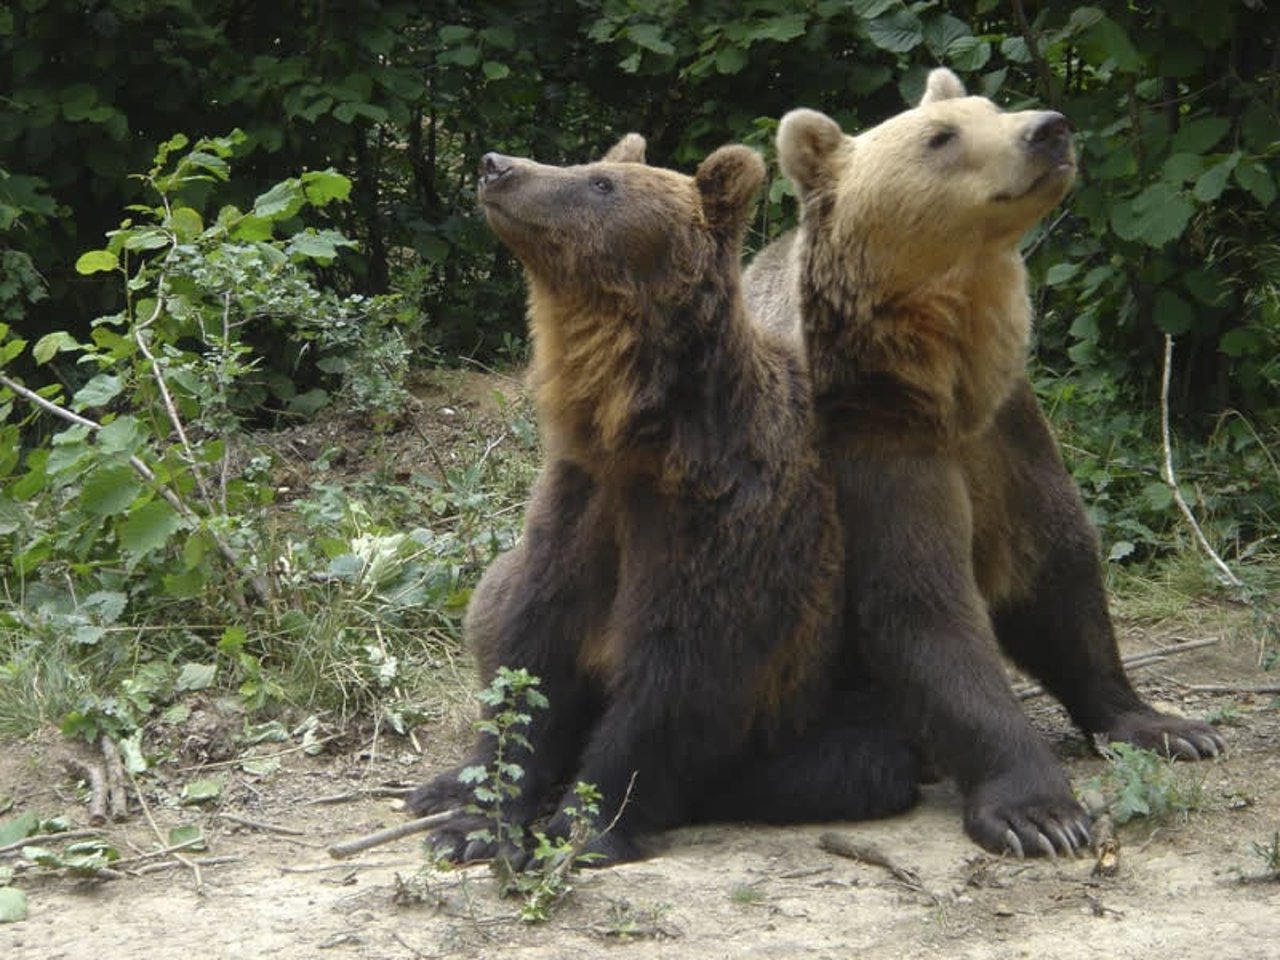 The bears Hansel and Gretel at the Romanian bear sancturary in Zarnesti, Romania